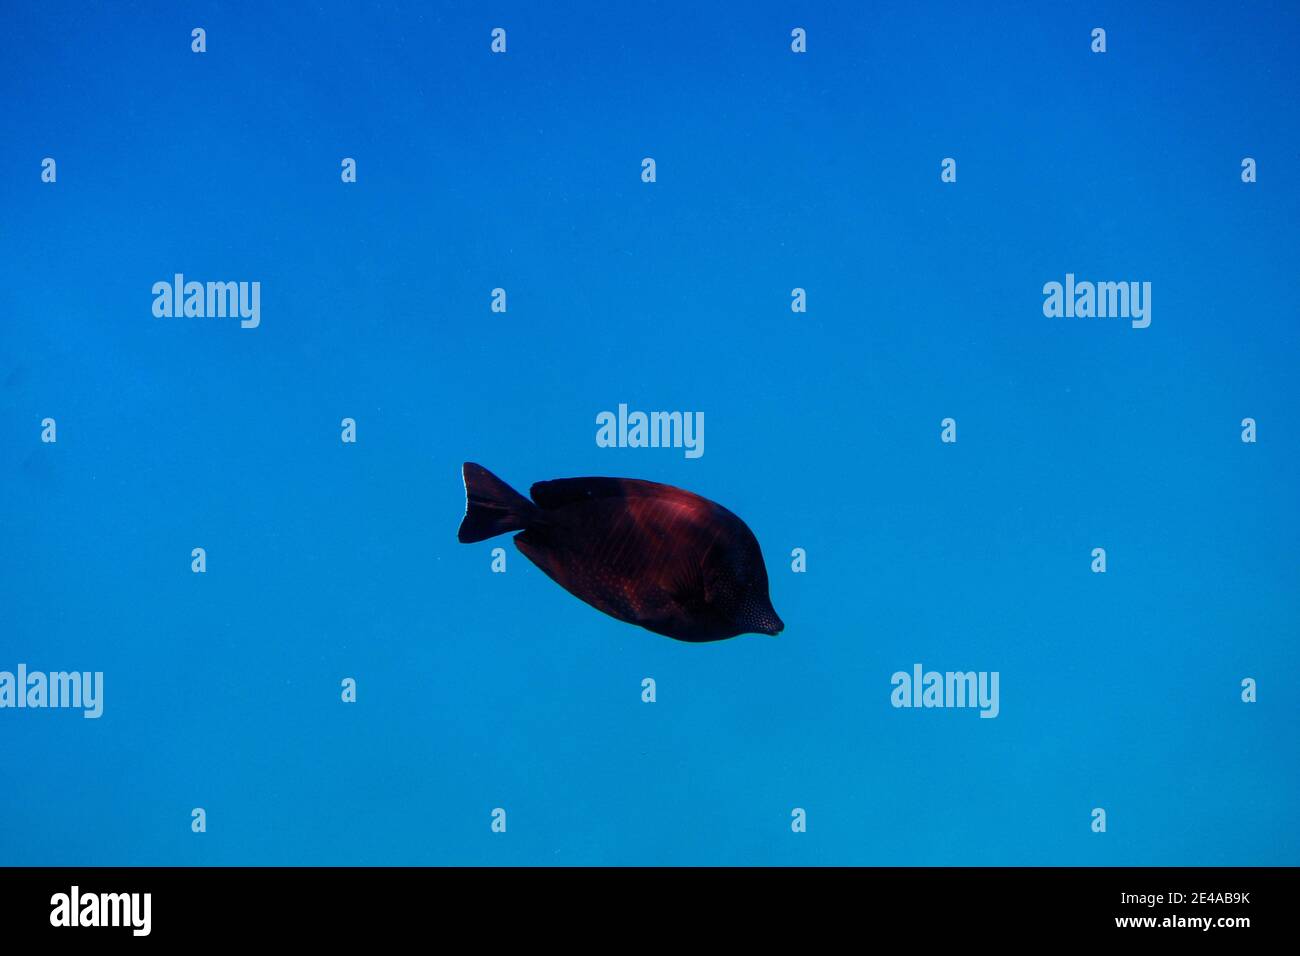 single fish in the blue sea water Stock Photo